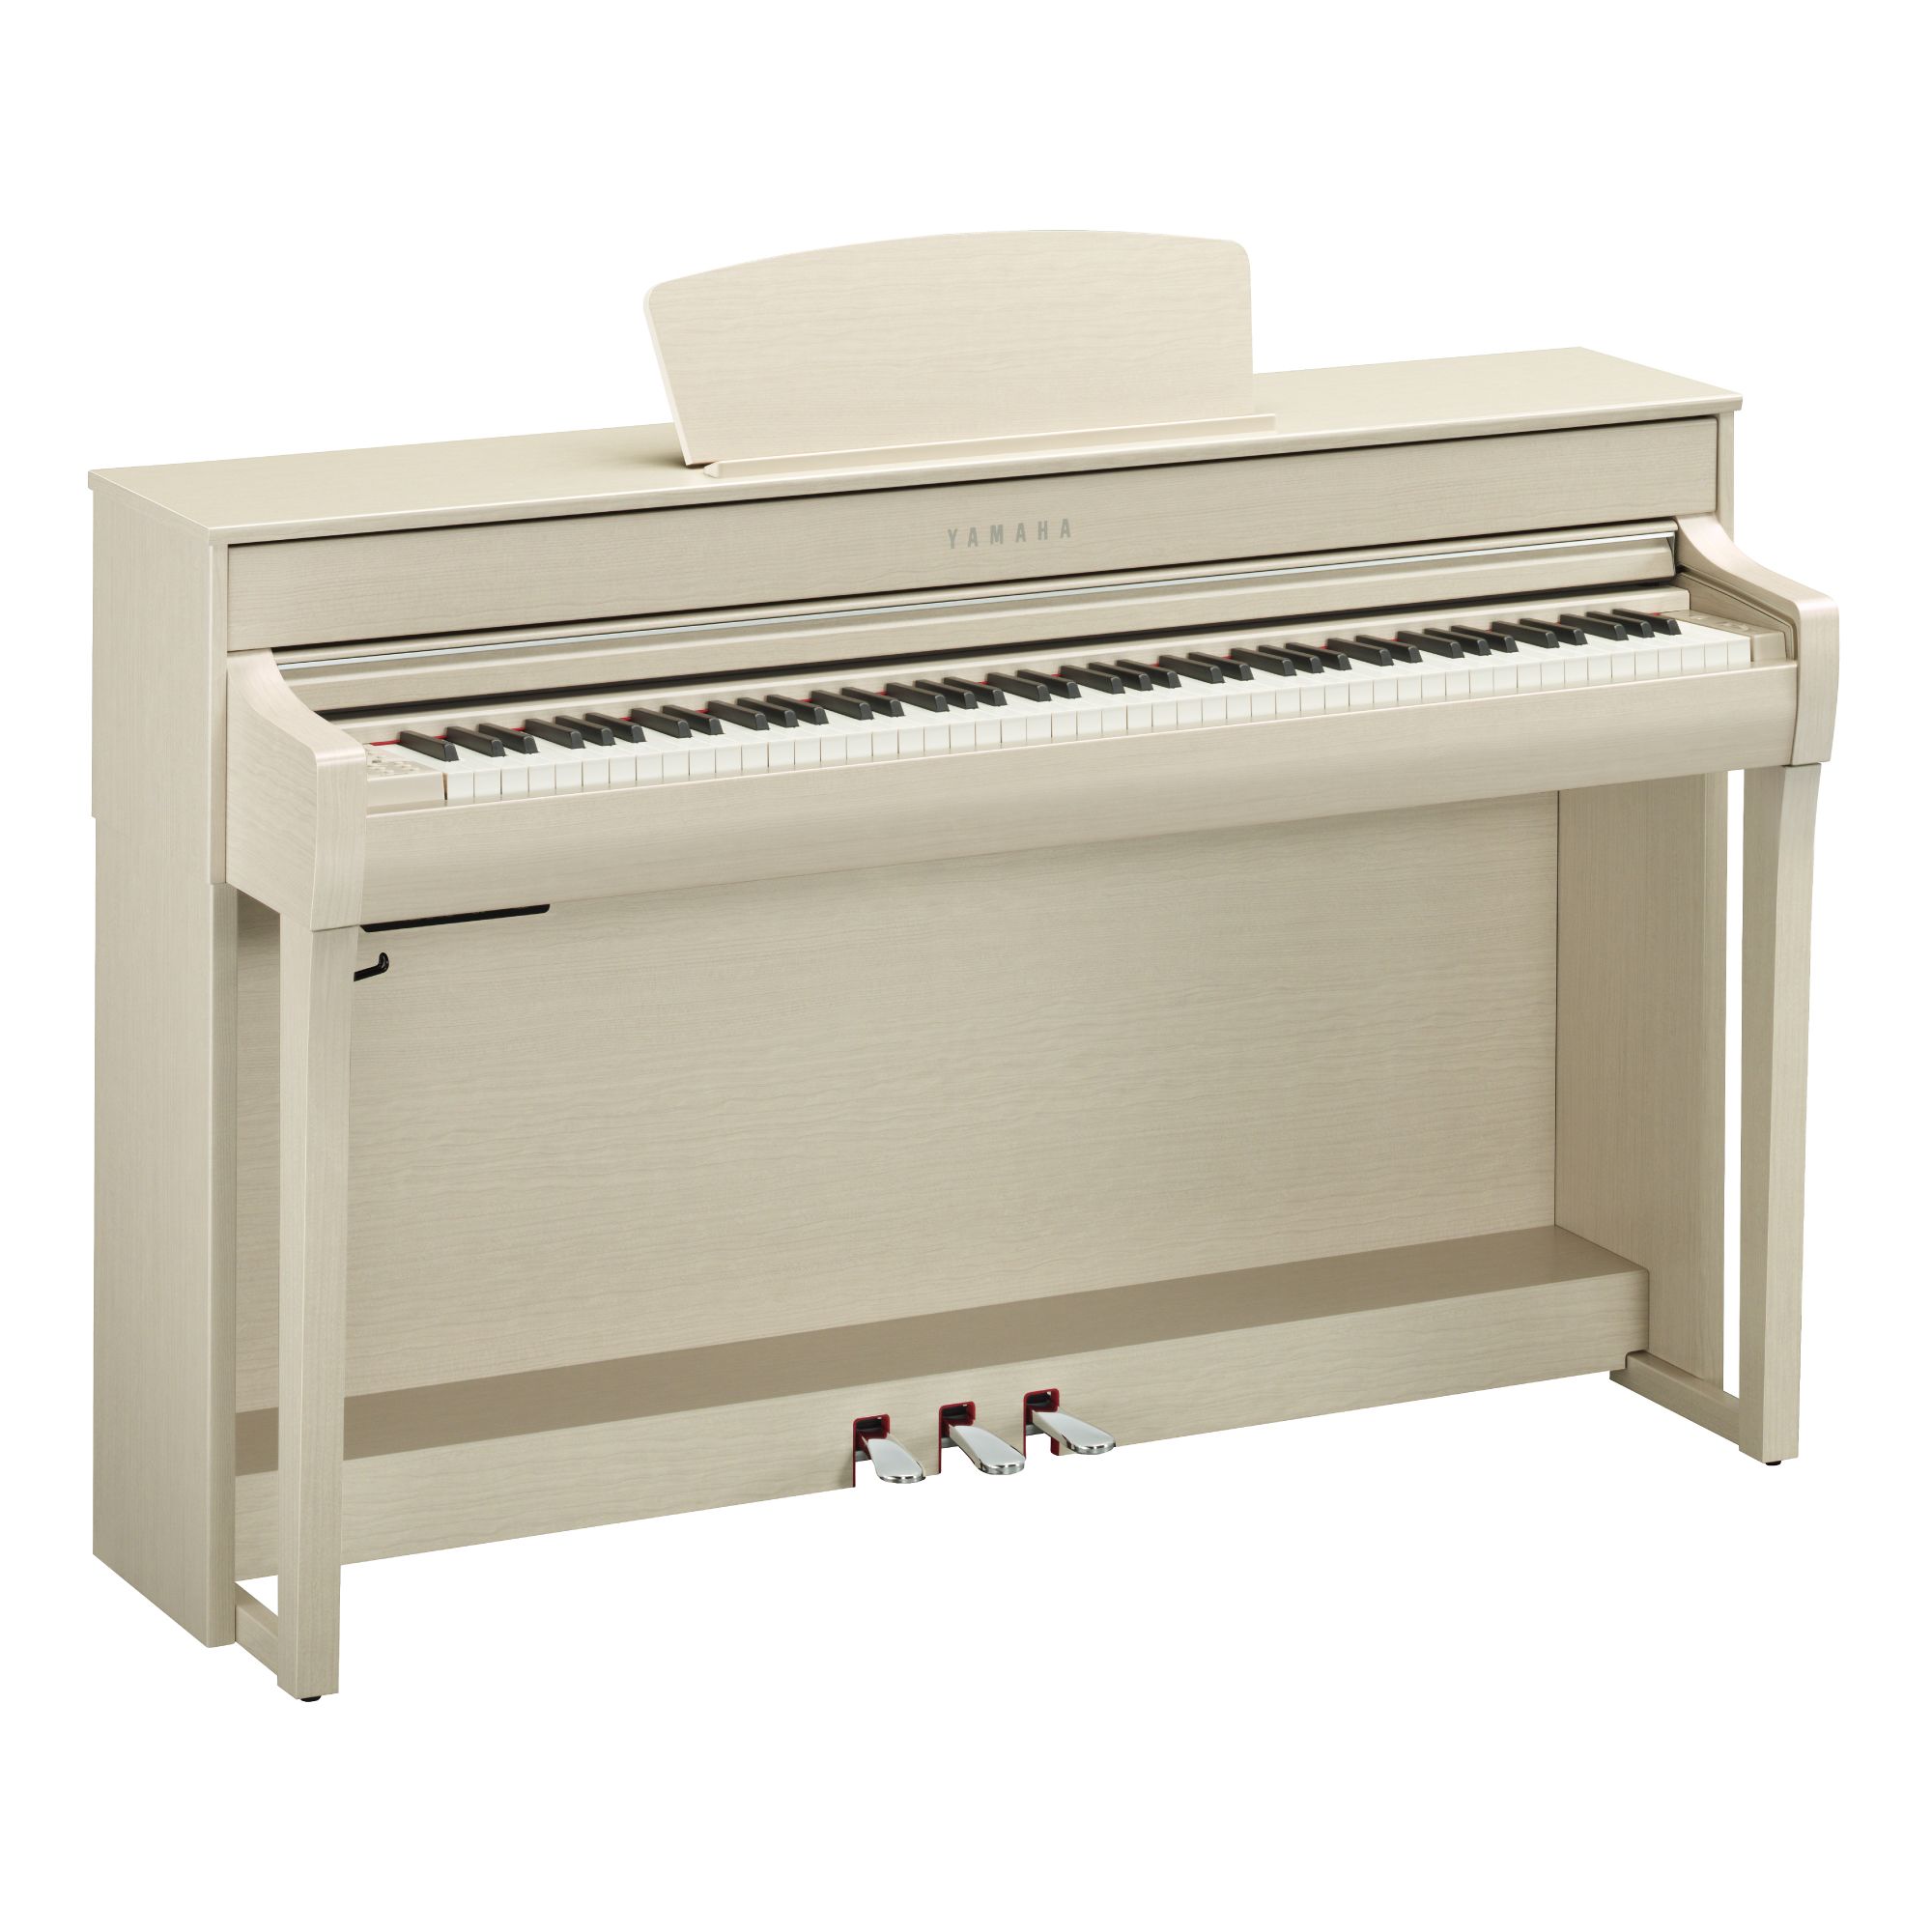 خرید پیانو دیجیتال یاماها مدل CLP-735